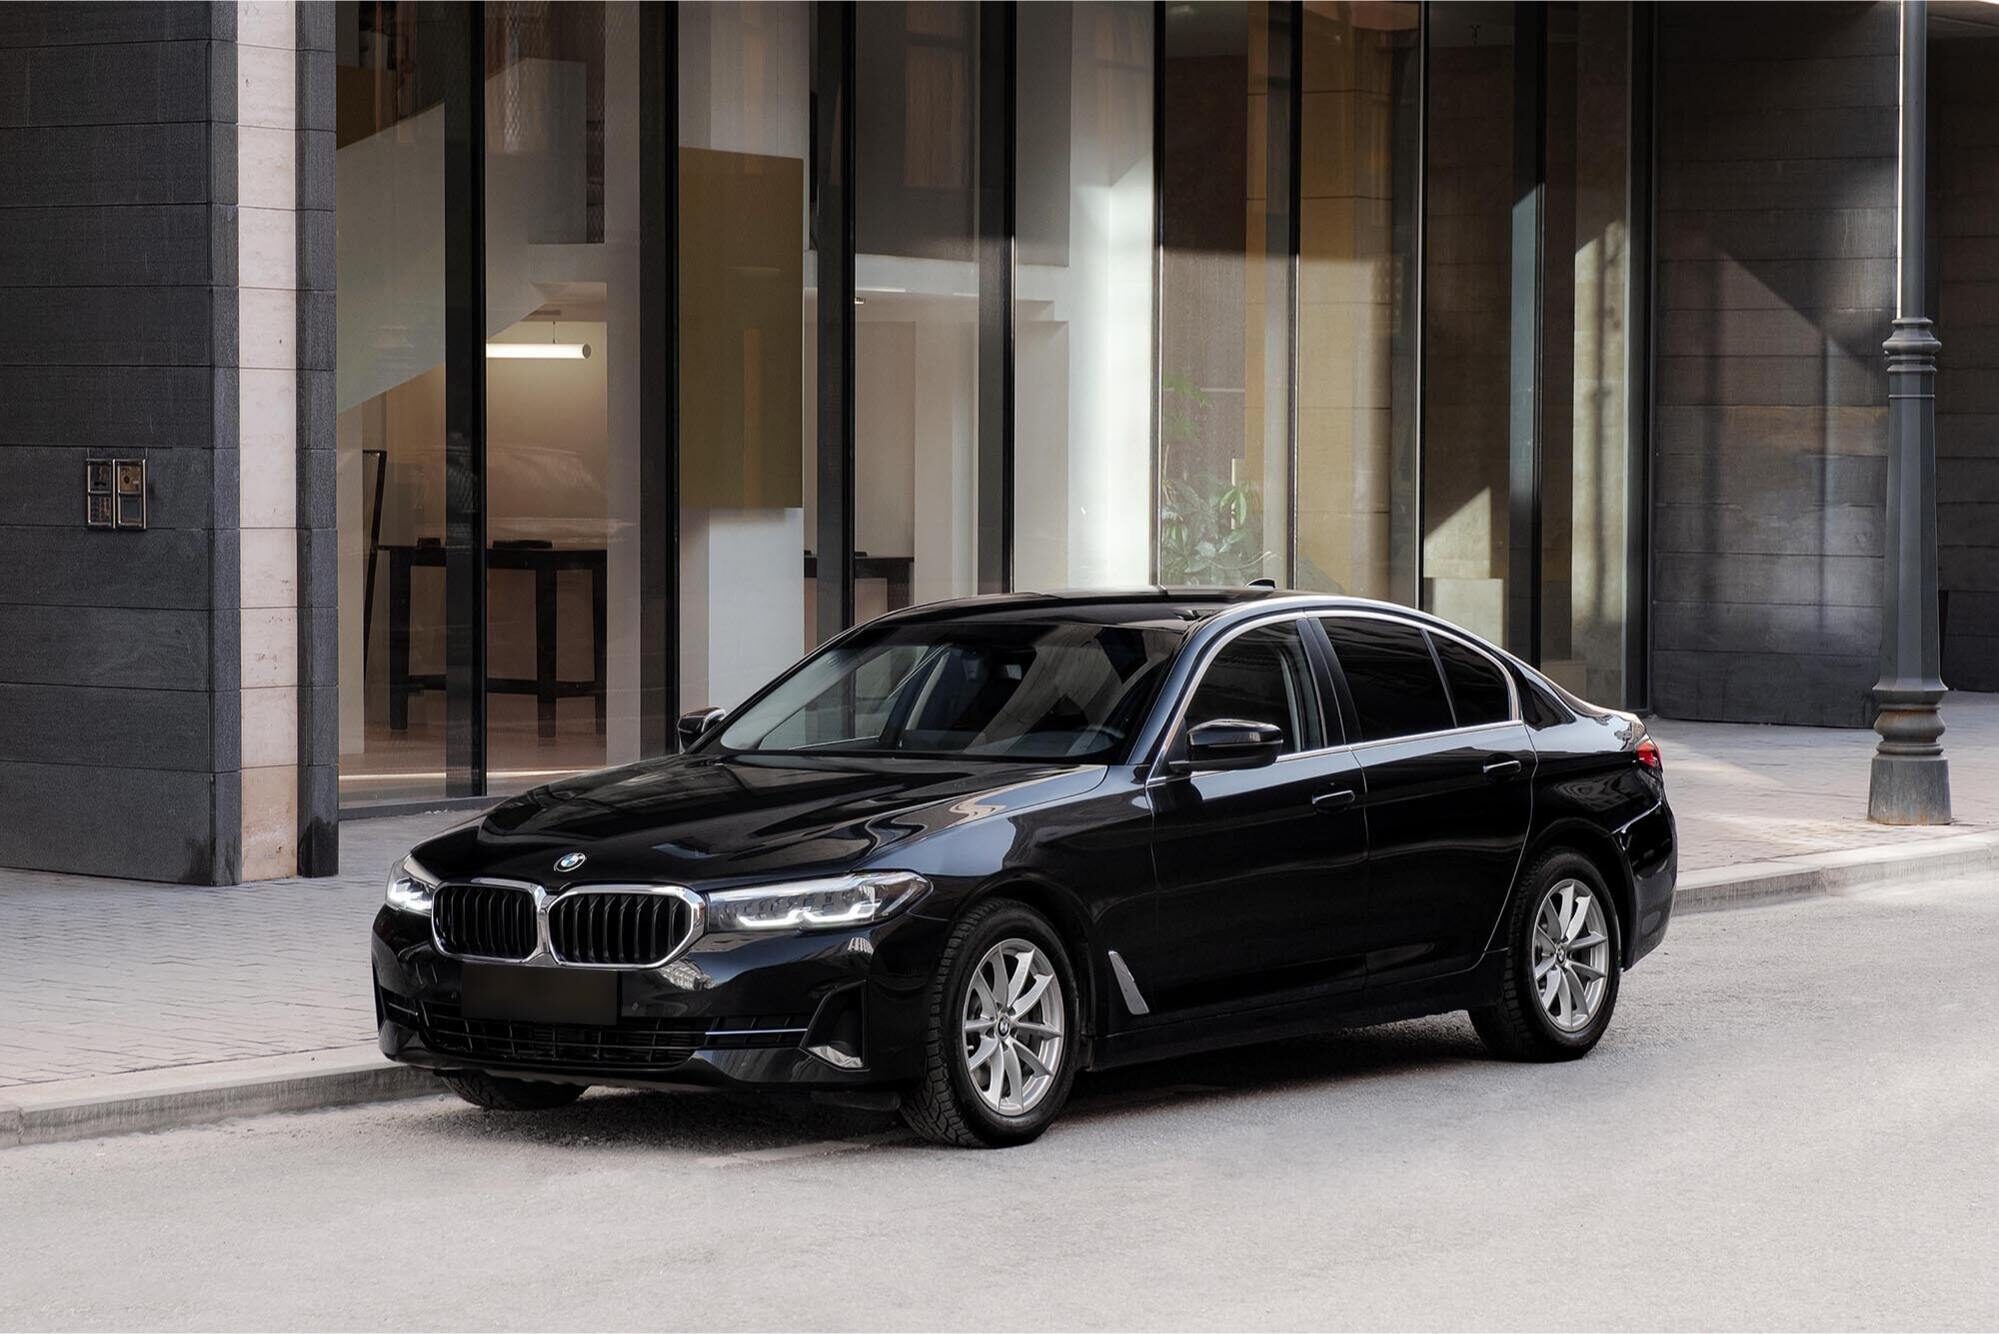 Скидка на ареду BMW 520d G30 restyling 4WD xDrive 2020 года выпуска, кпп: Автомат 